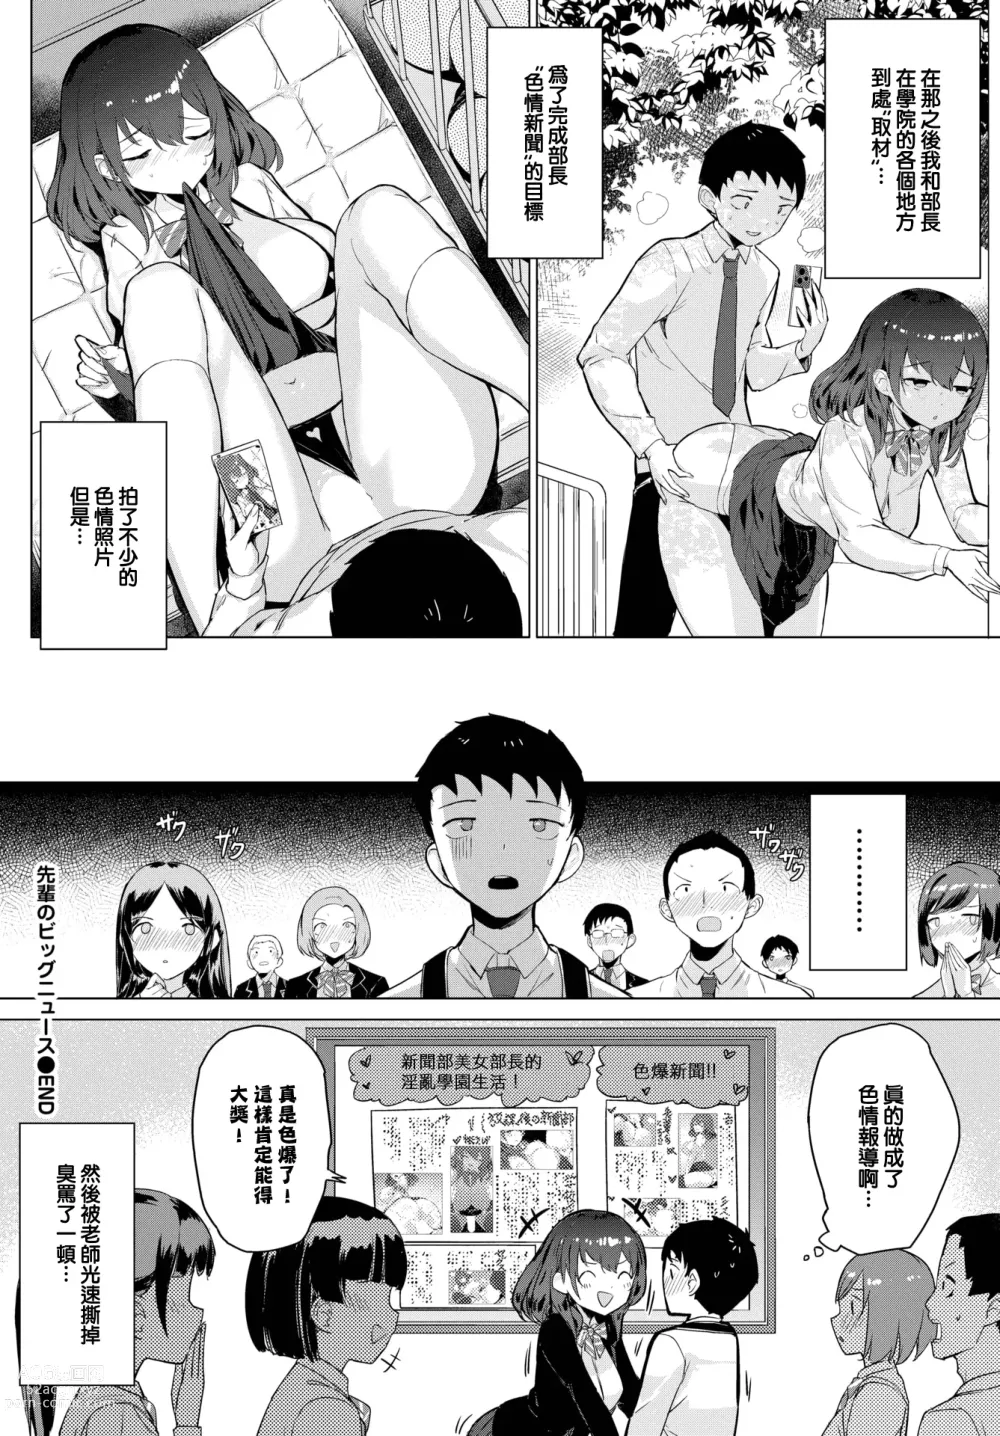 Page 21 of manga Senpai no Big News